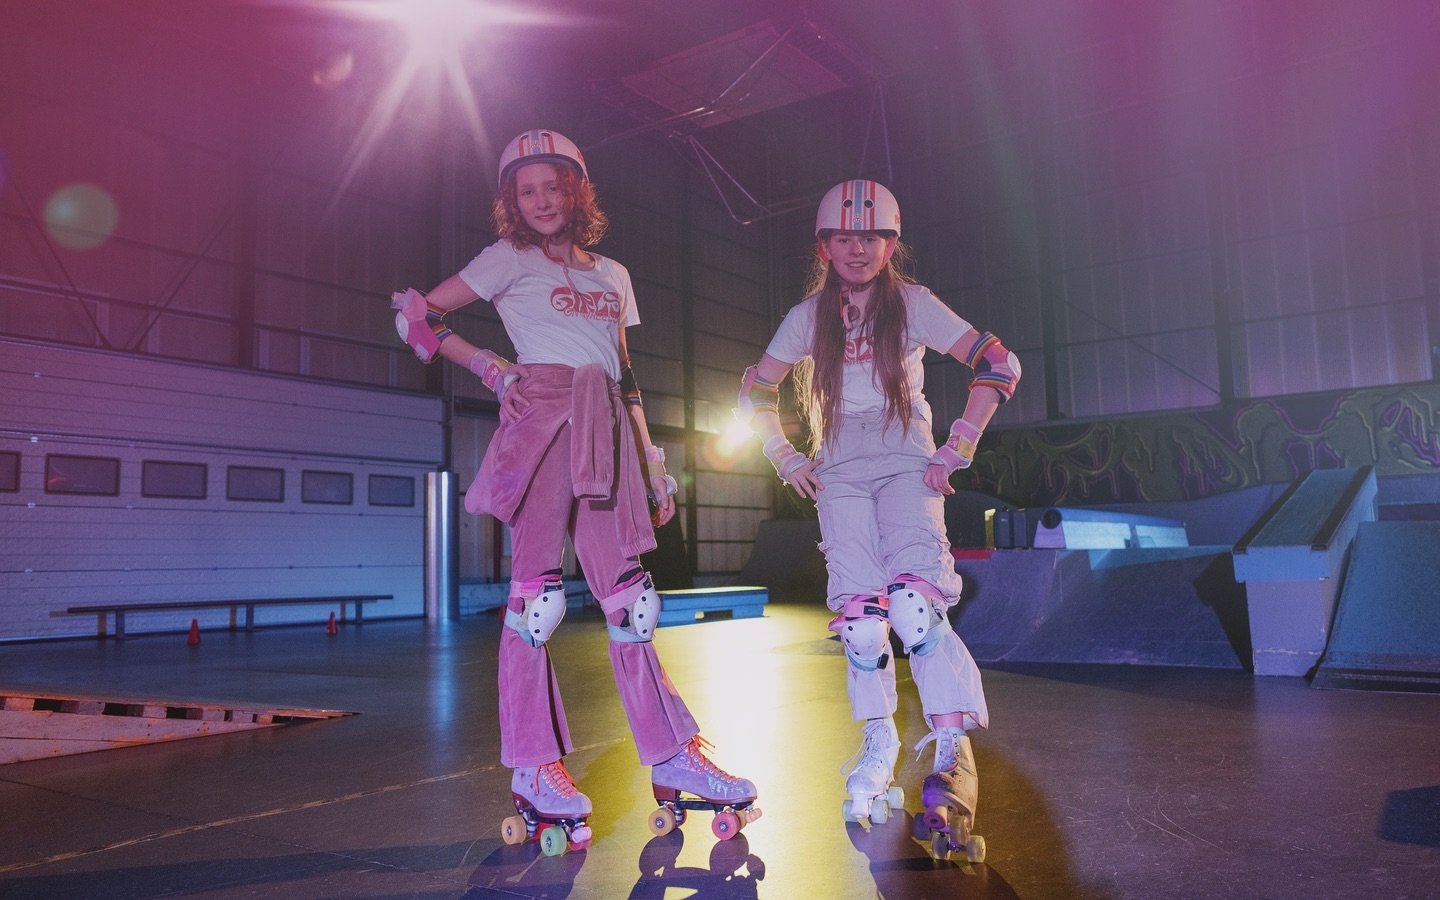 GOW CREW 🛼 #girlsonwheels #quads #skate #fun